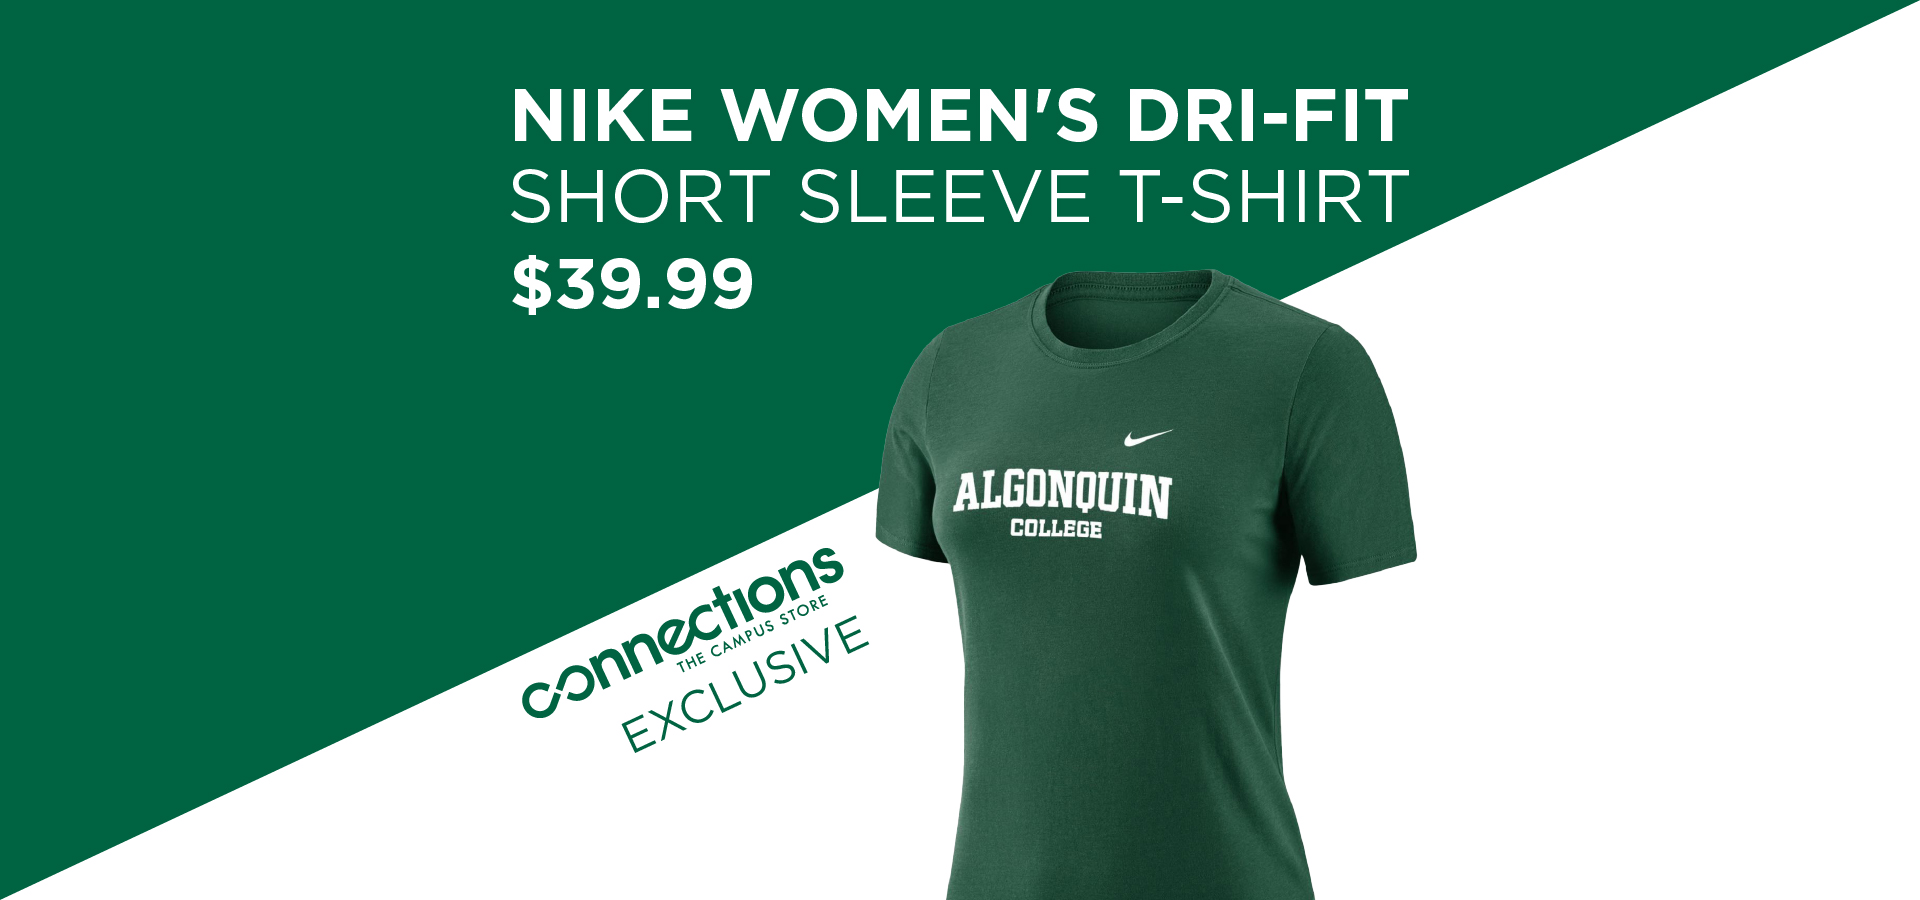 Photo: Green Nike T-shirt with Algonquin College logo. Text: Nike Women's Dri-Fit T-shirt $39.99